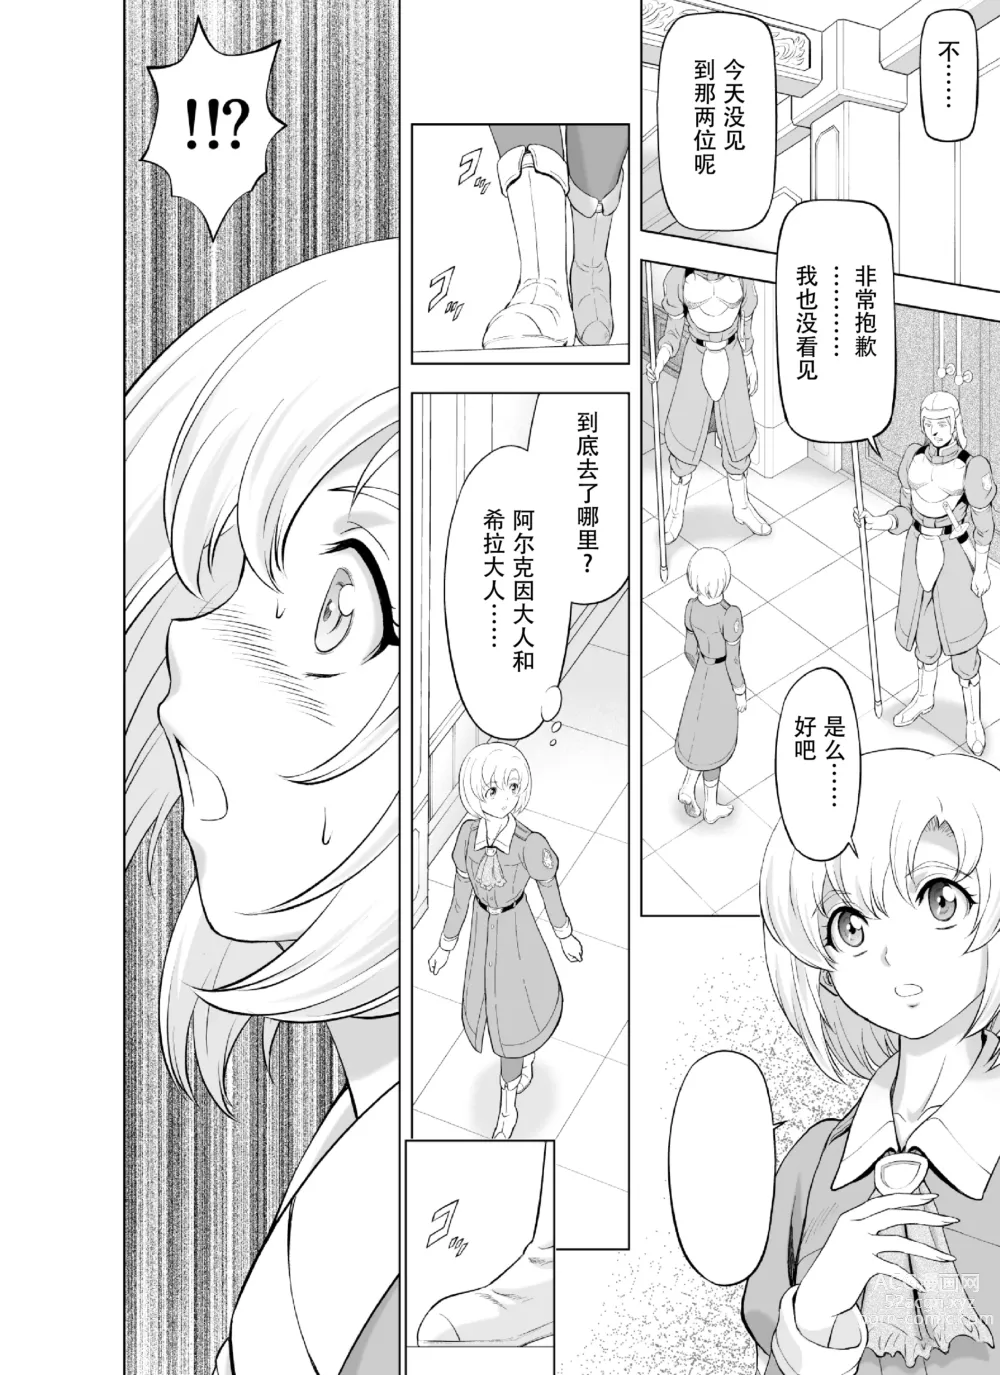 Page 6 of doujinshi Reties no Michibiki Vol. 9